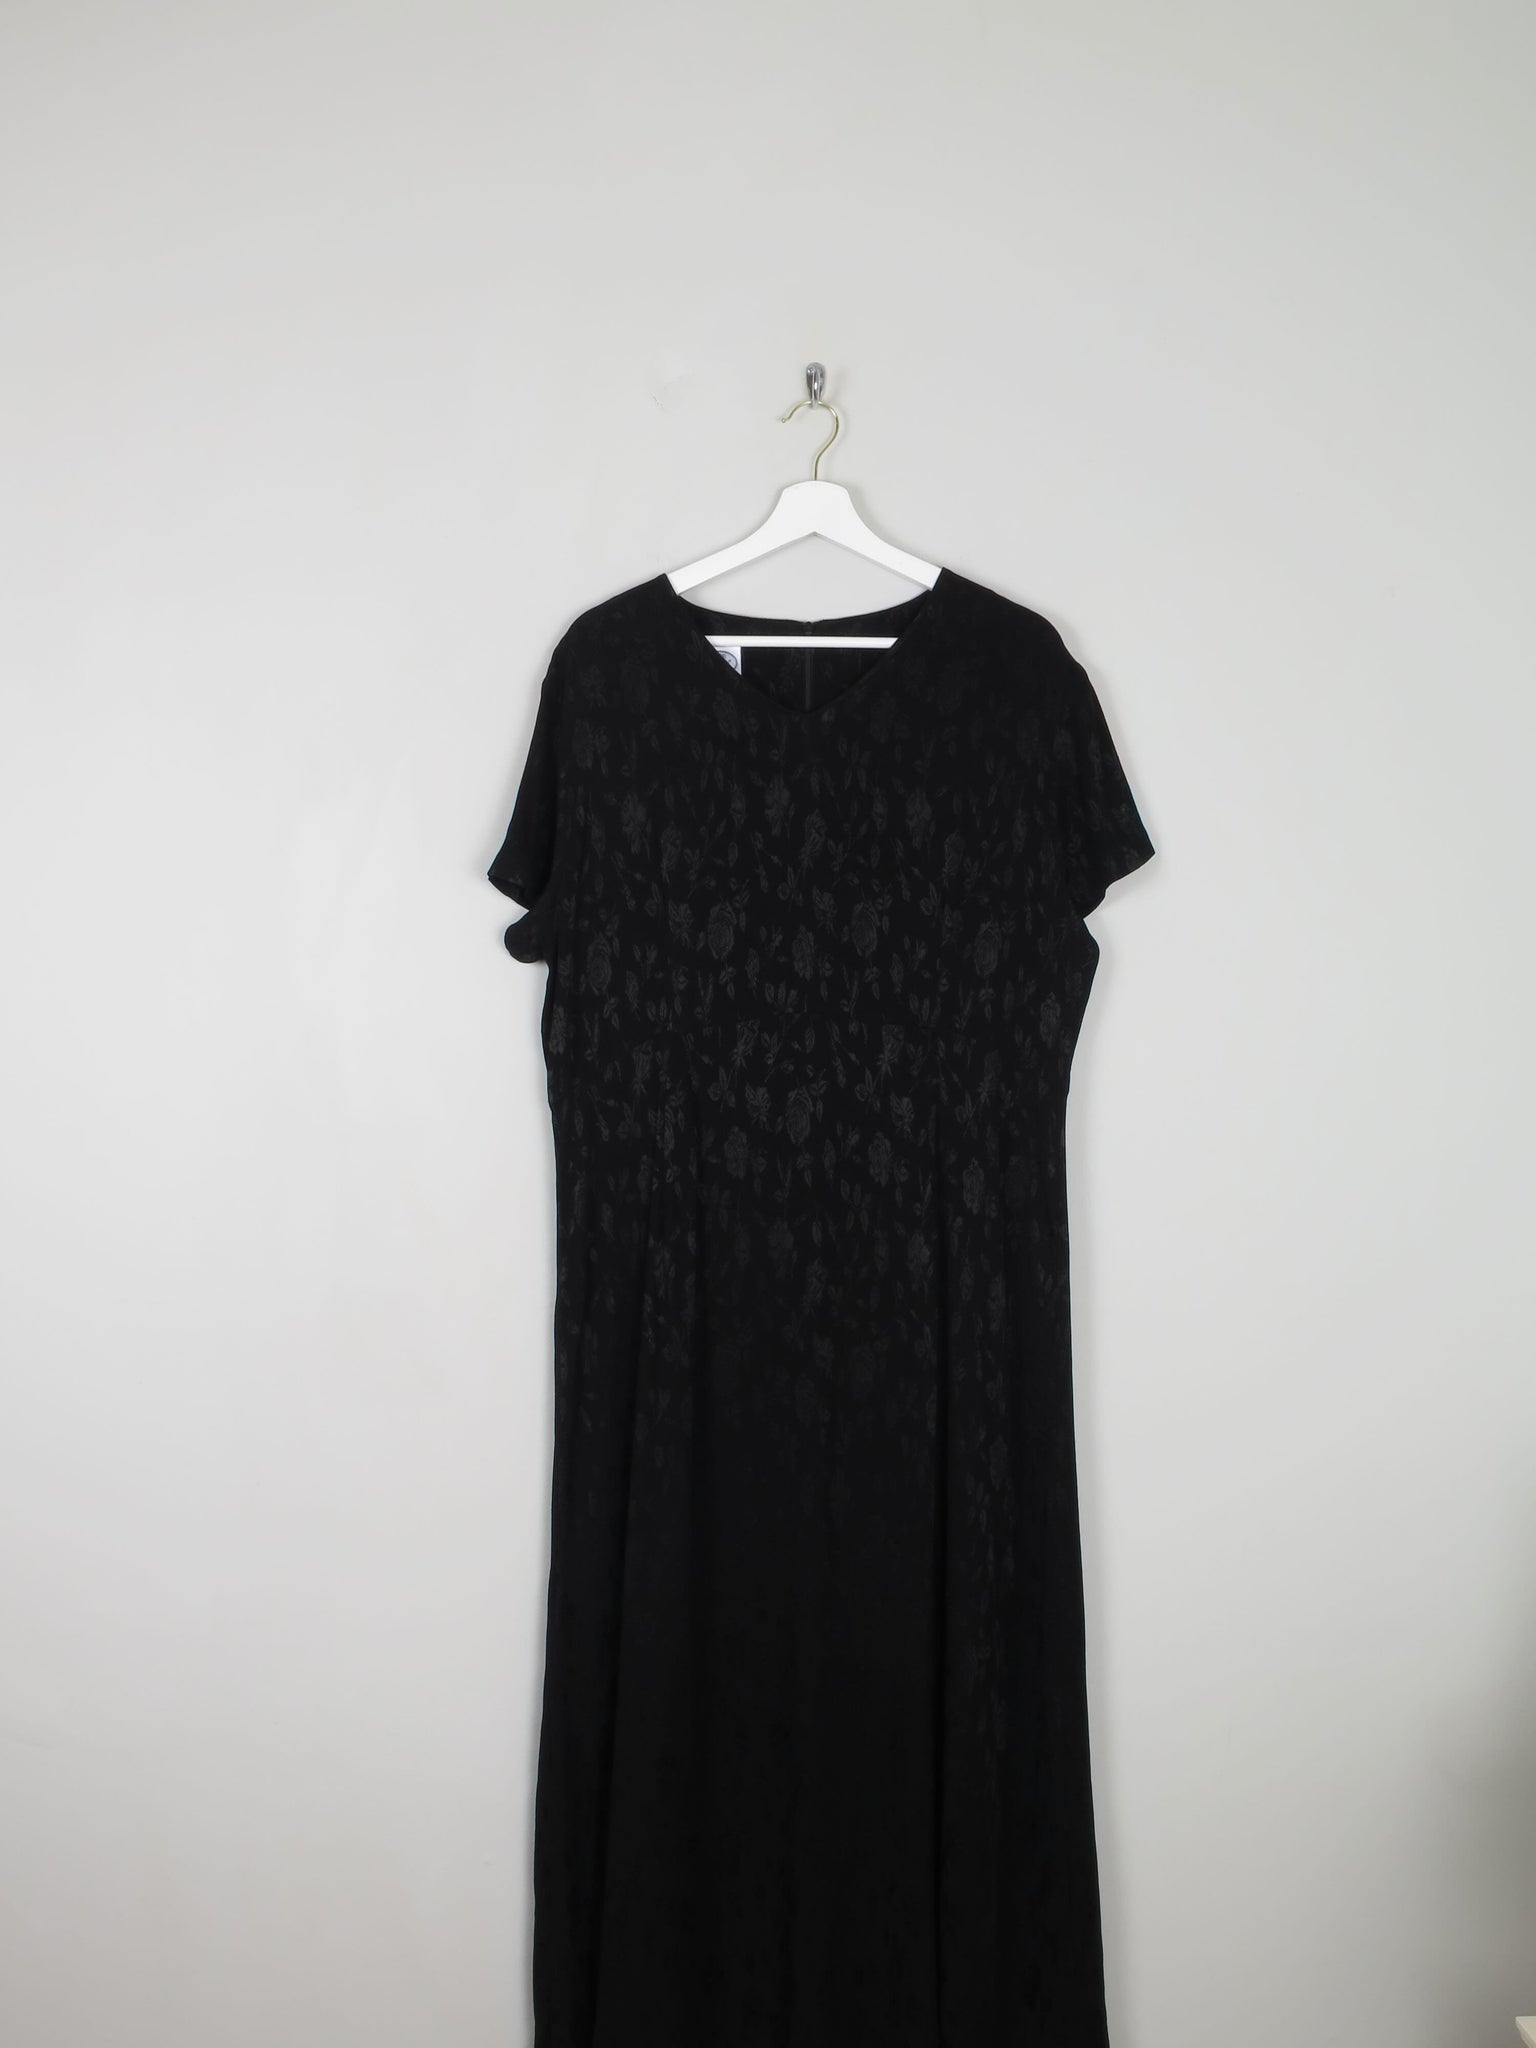 Black Jacquard Vintage Laura Ashley Dress XL Unowrn - The Harlequin